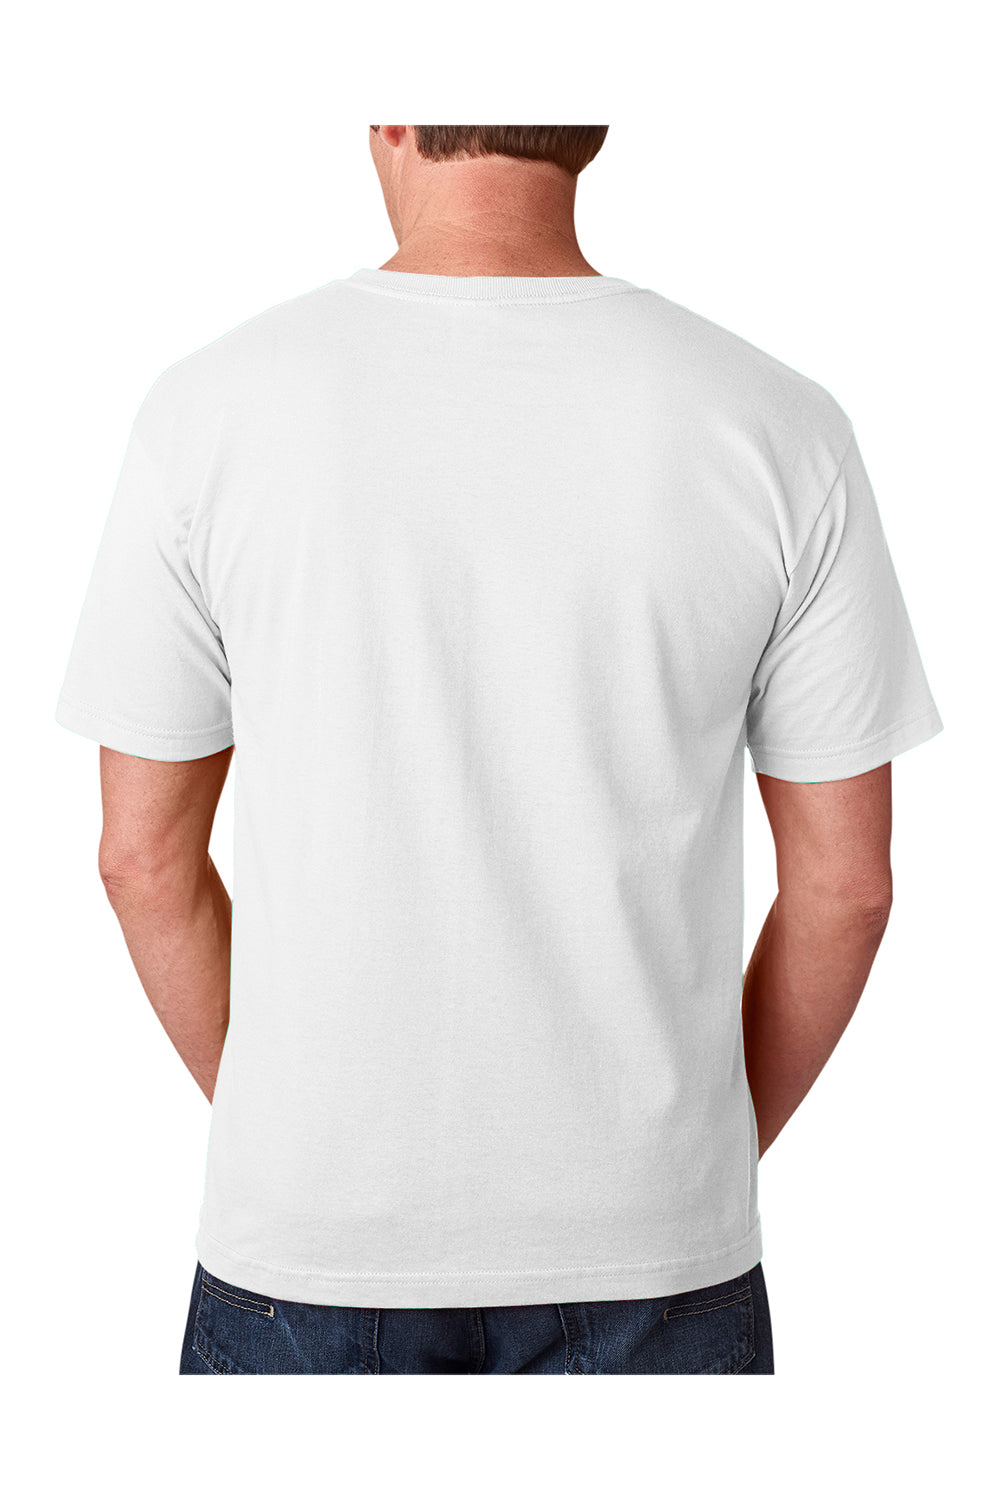 Bayside BA5040 Mens USA Made Short Sleeve Crewneck T-Shirt White Model Back